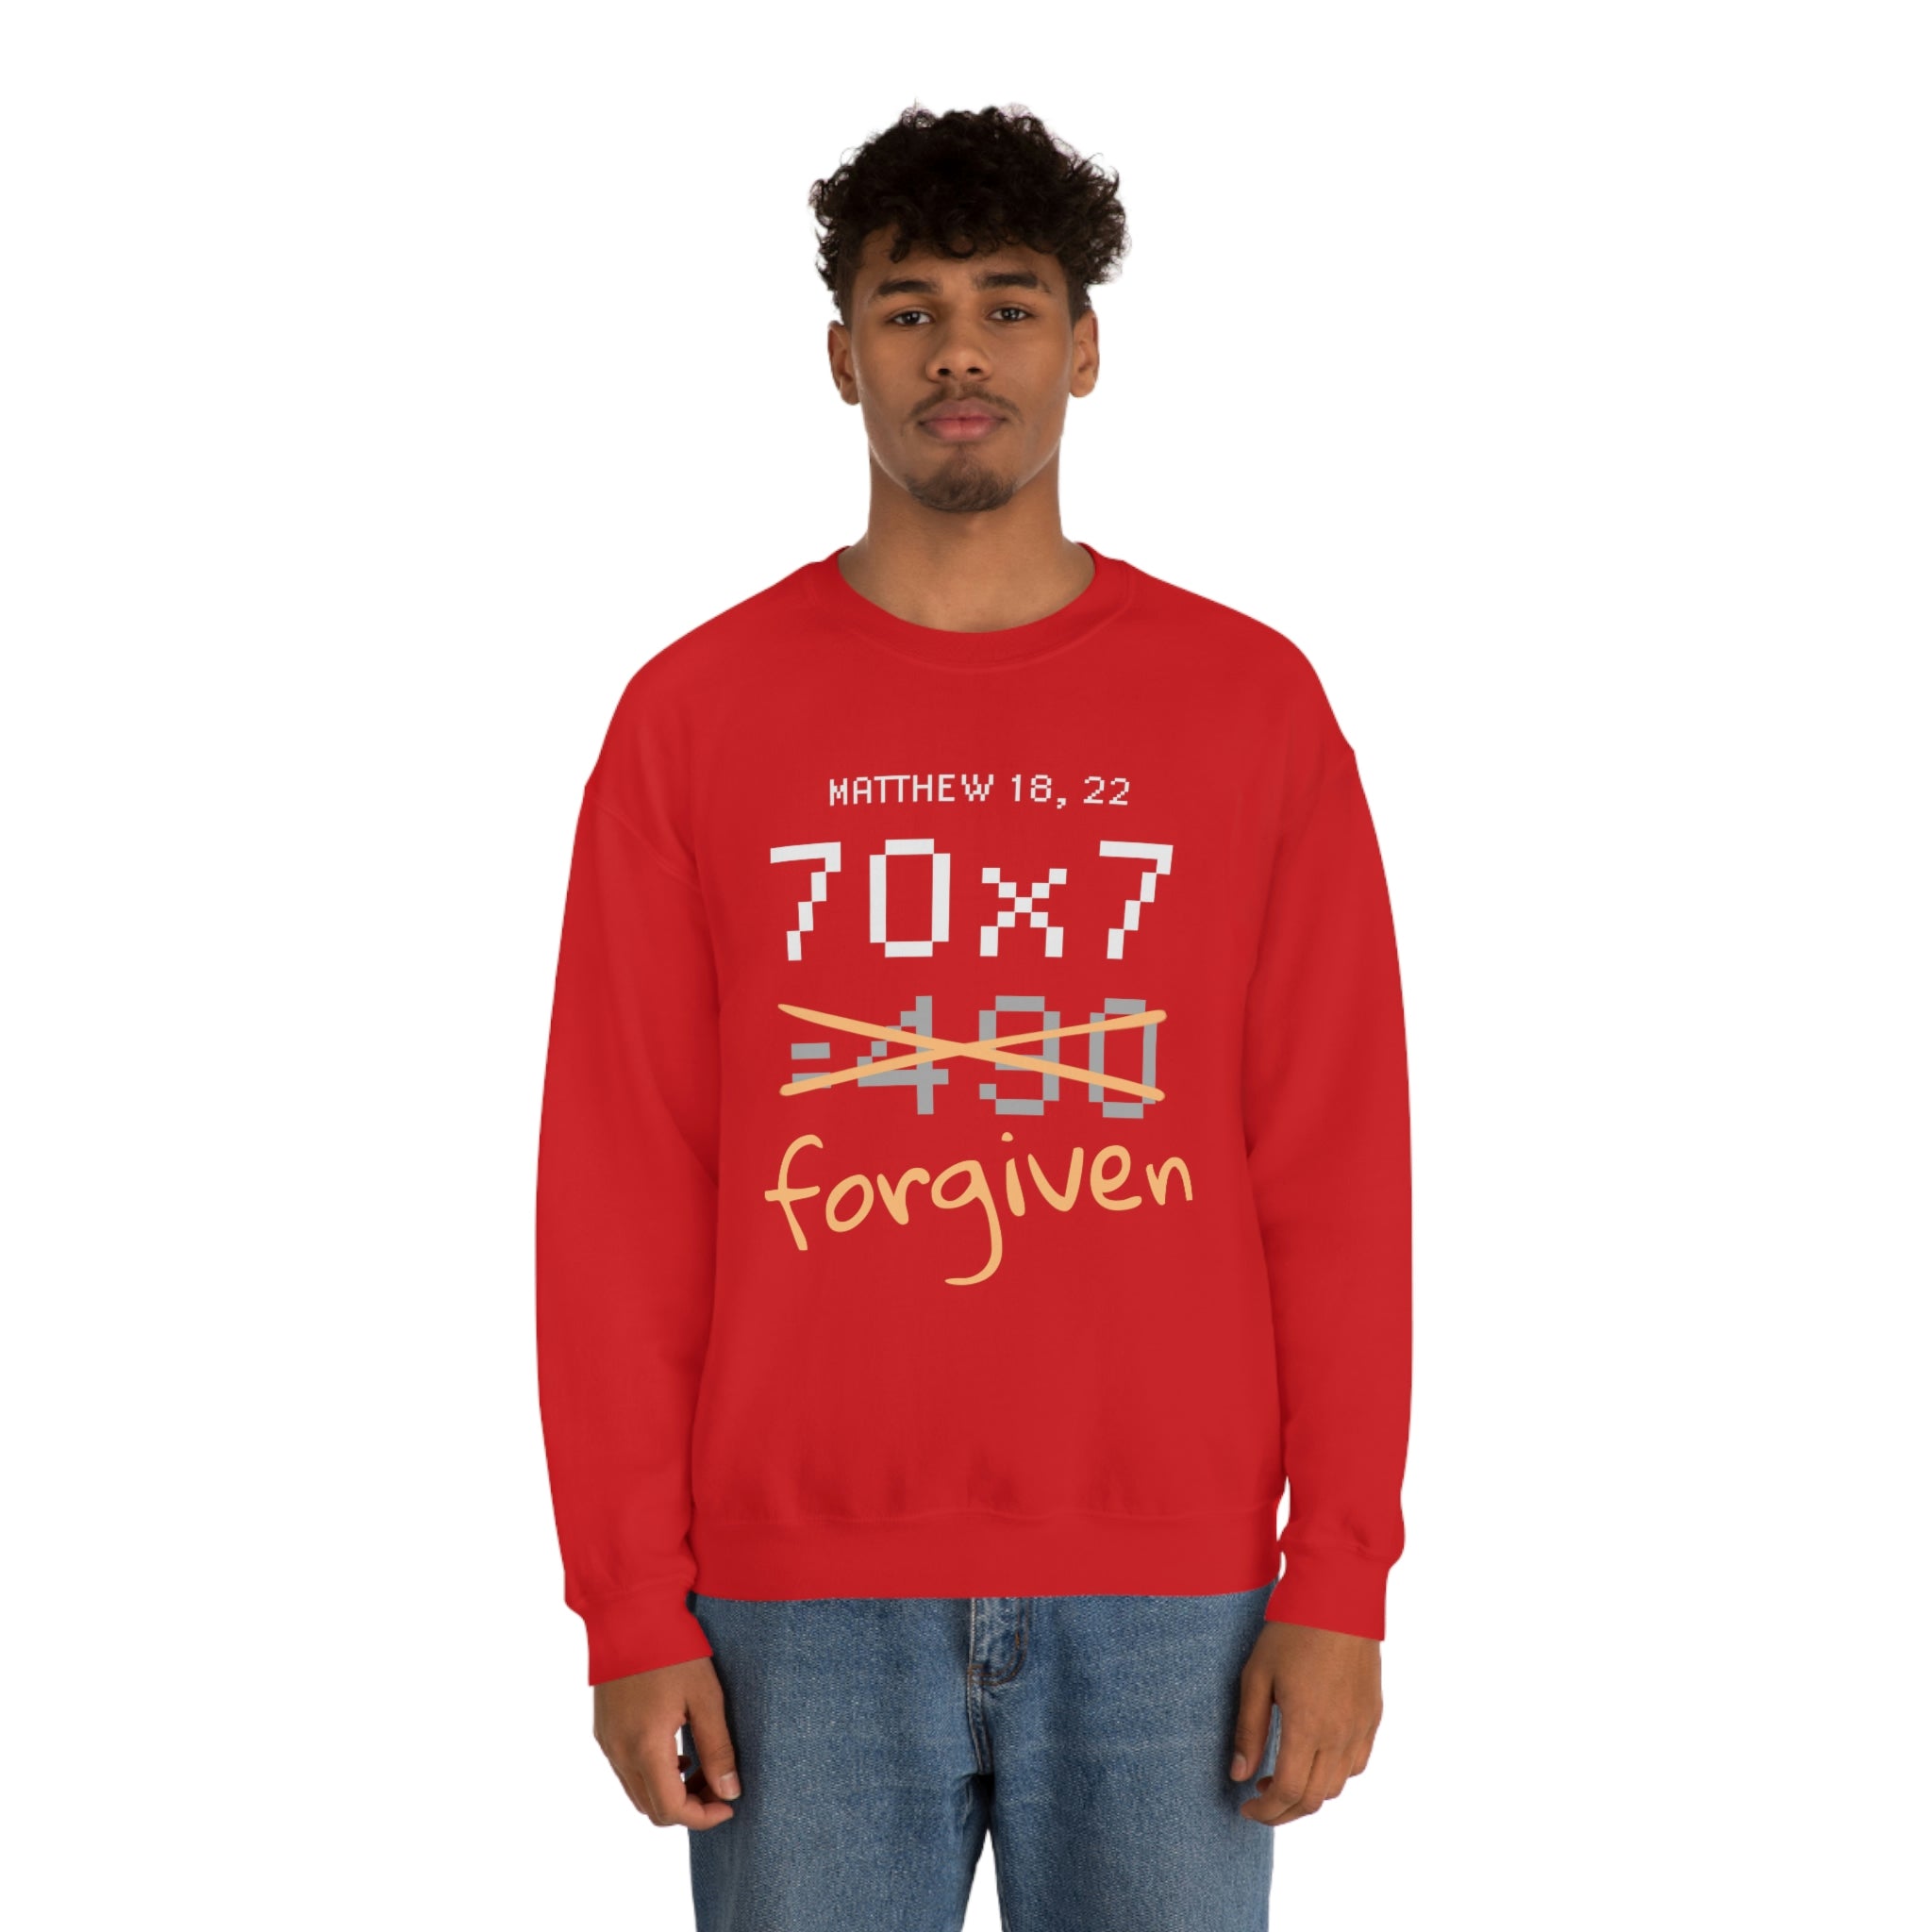 Forgiven Unisex Sweatshirt